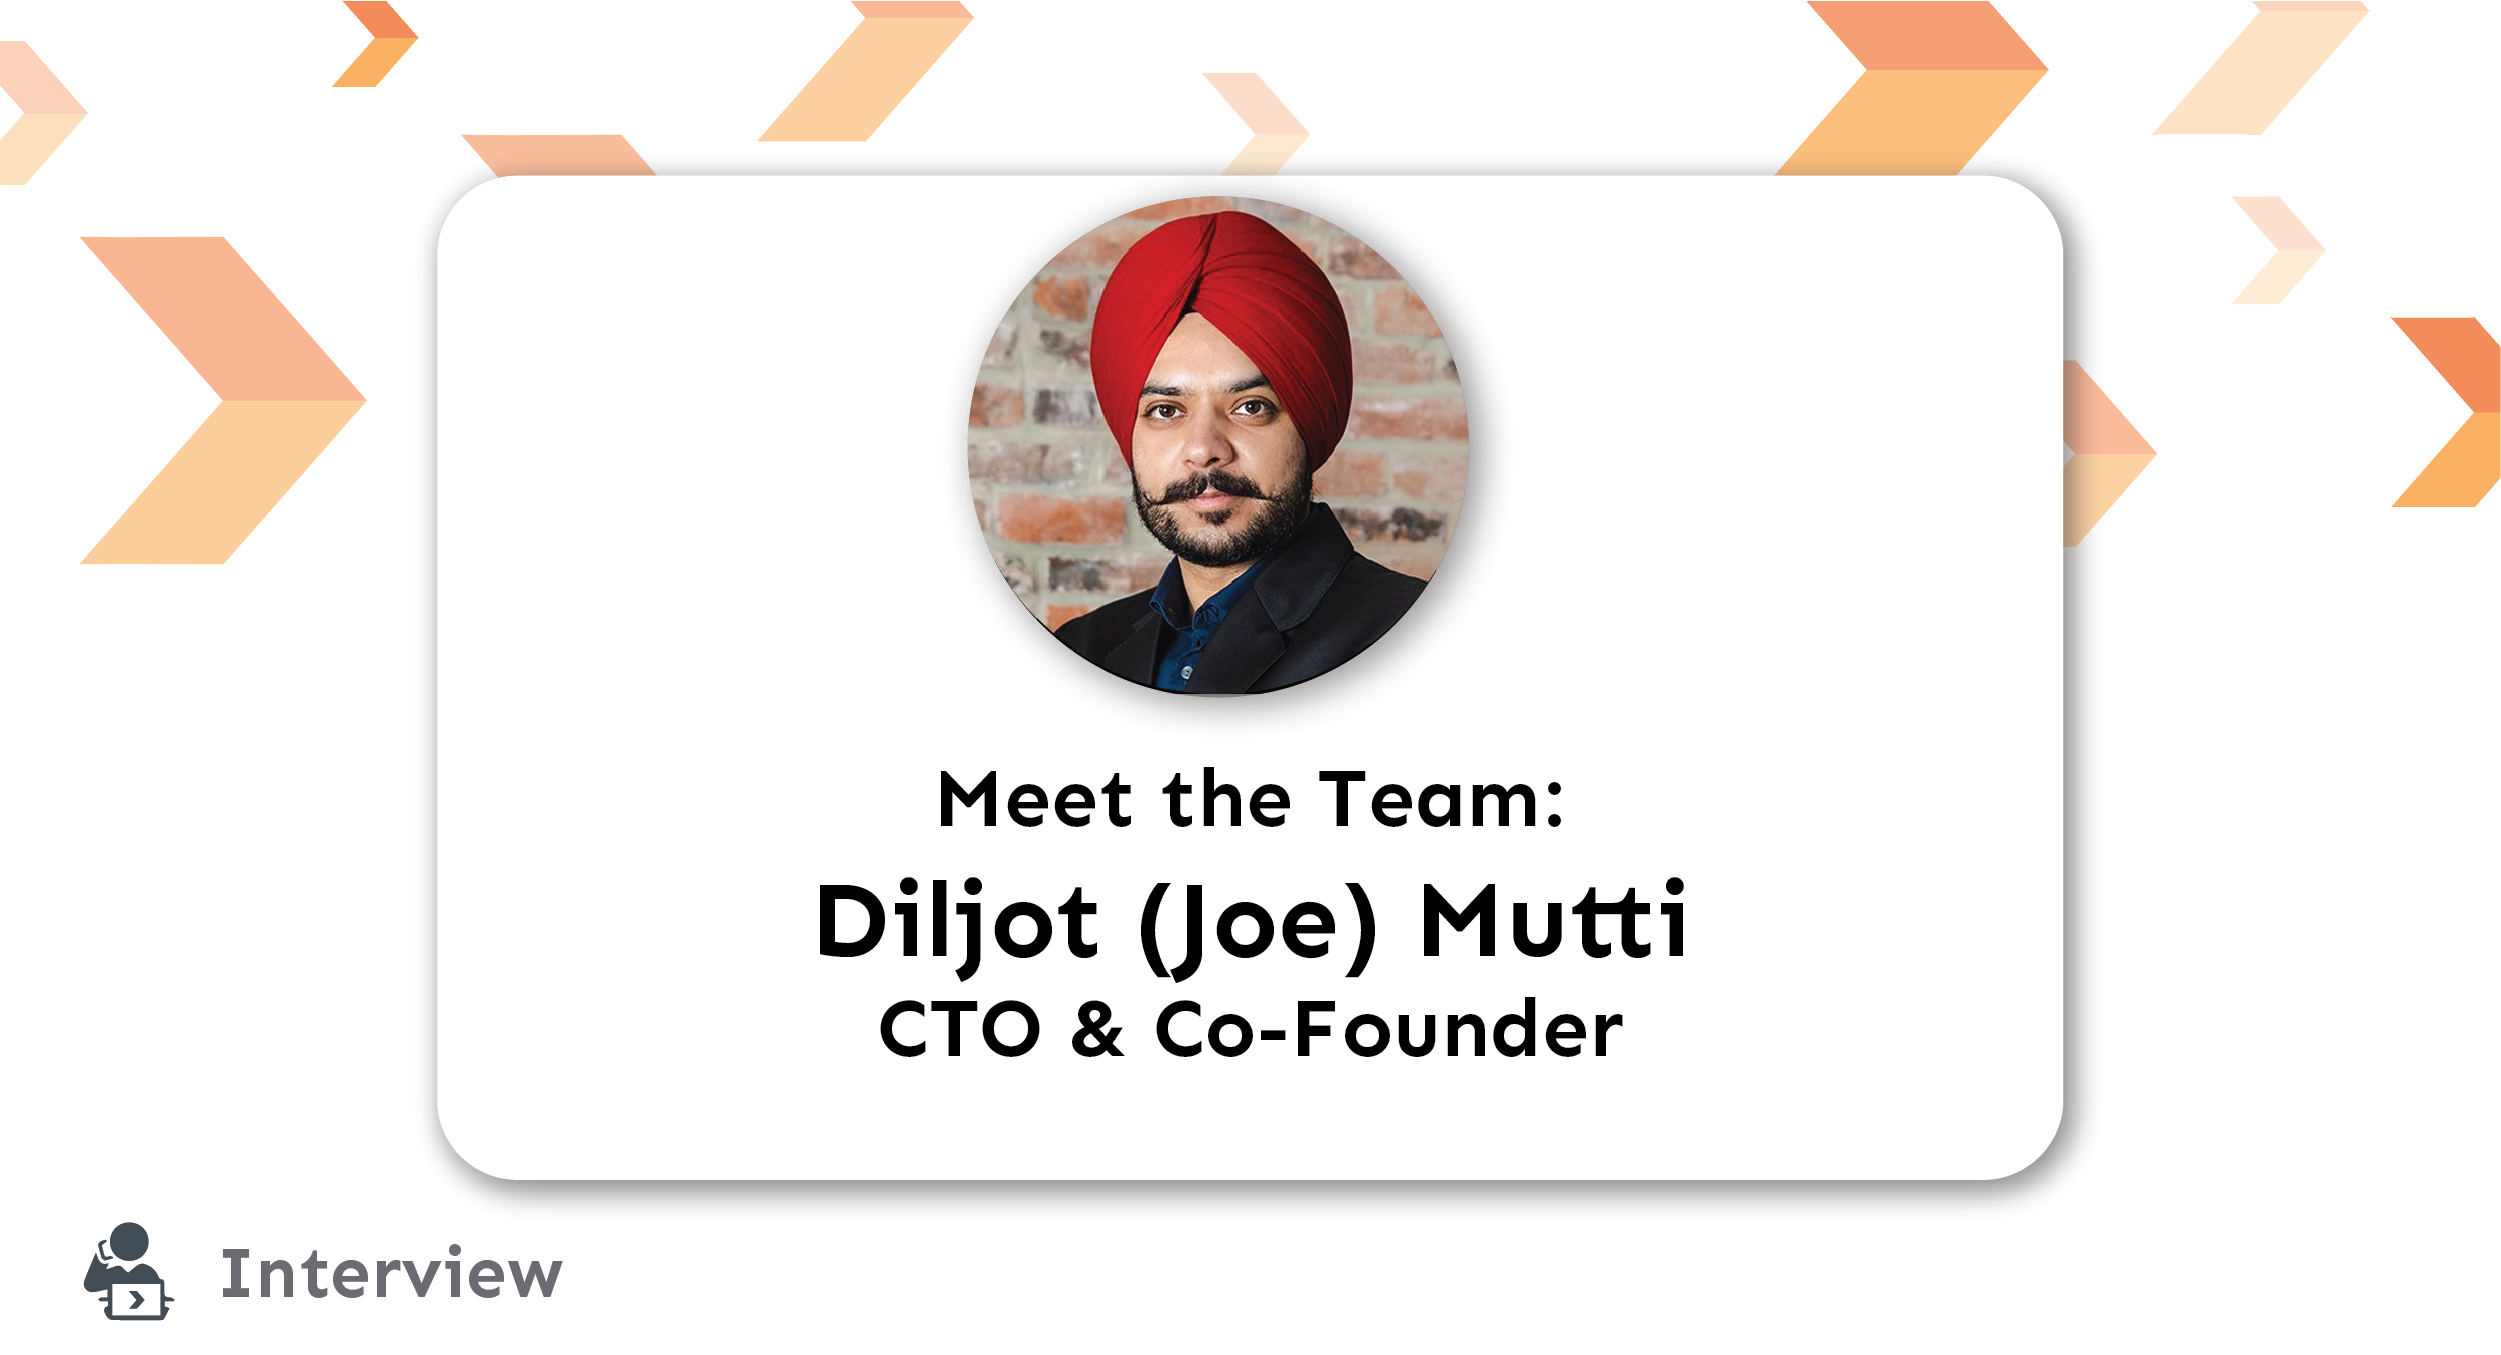 Blog- Meet the Team- CTO & Co-Founder